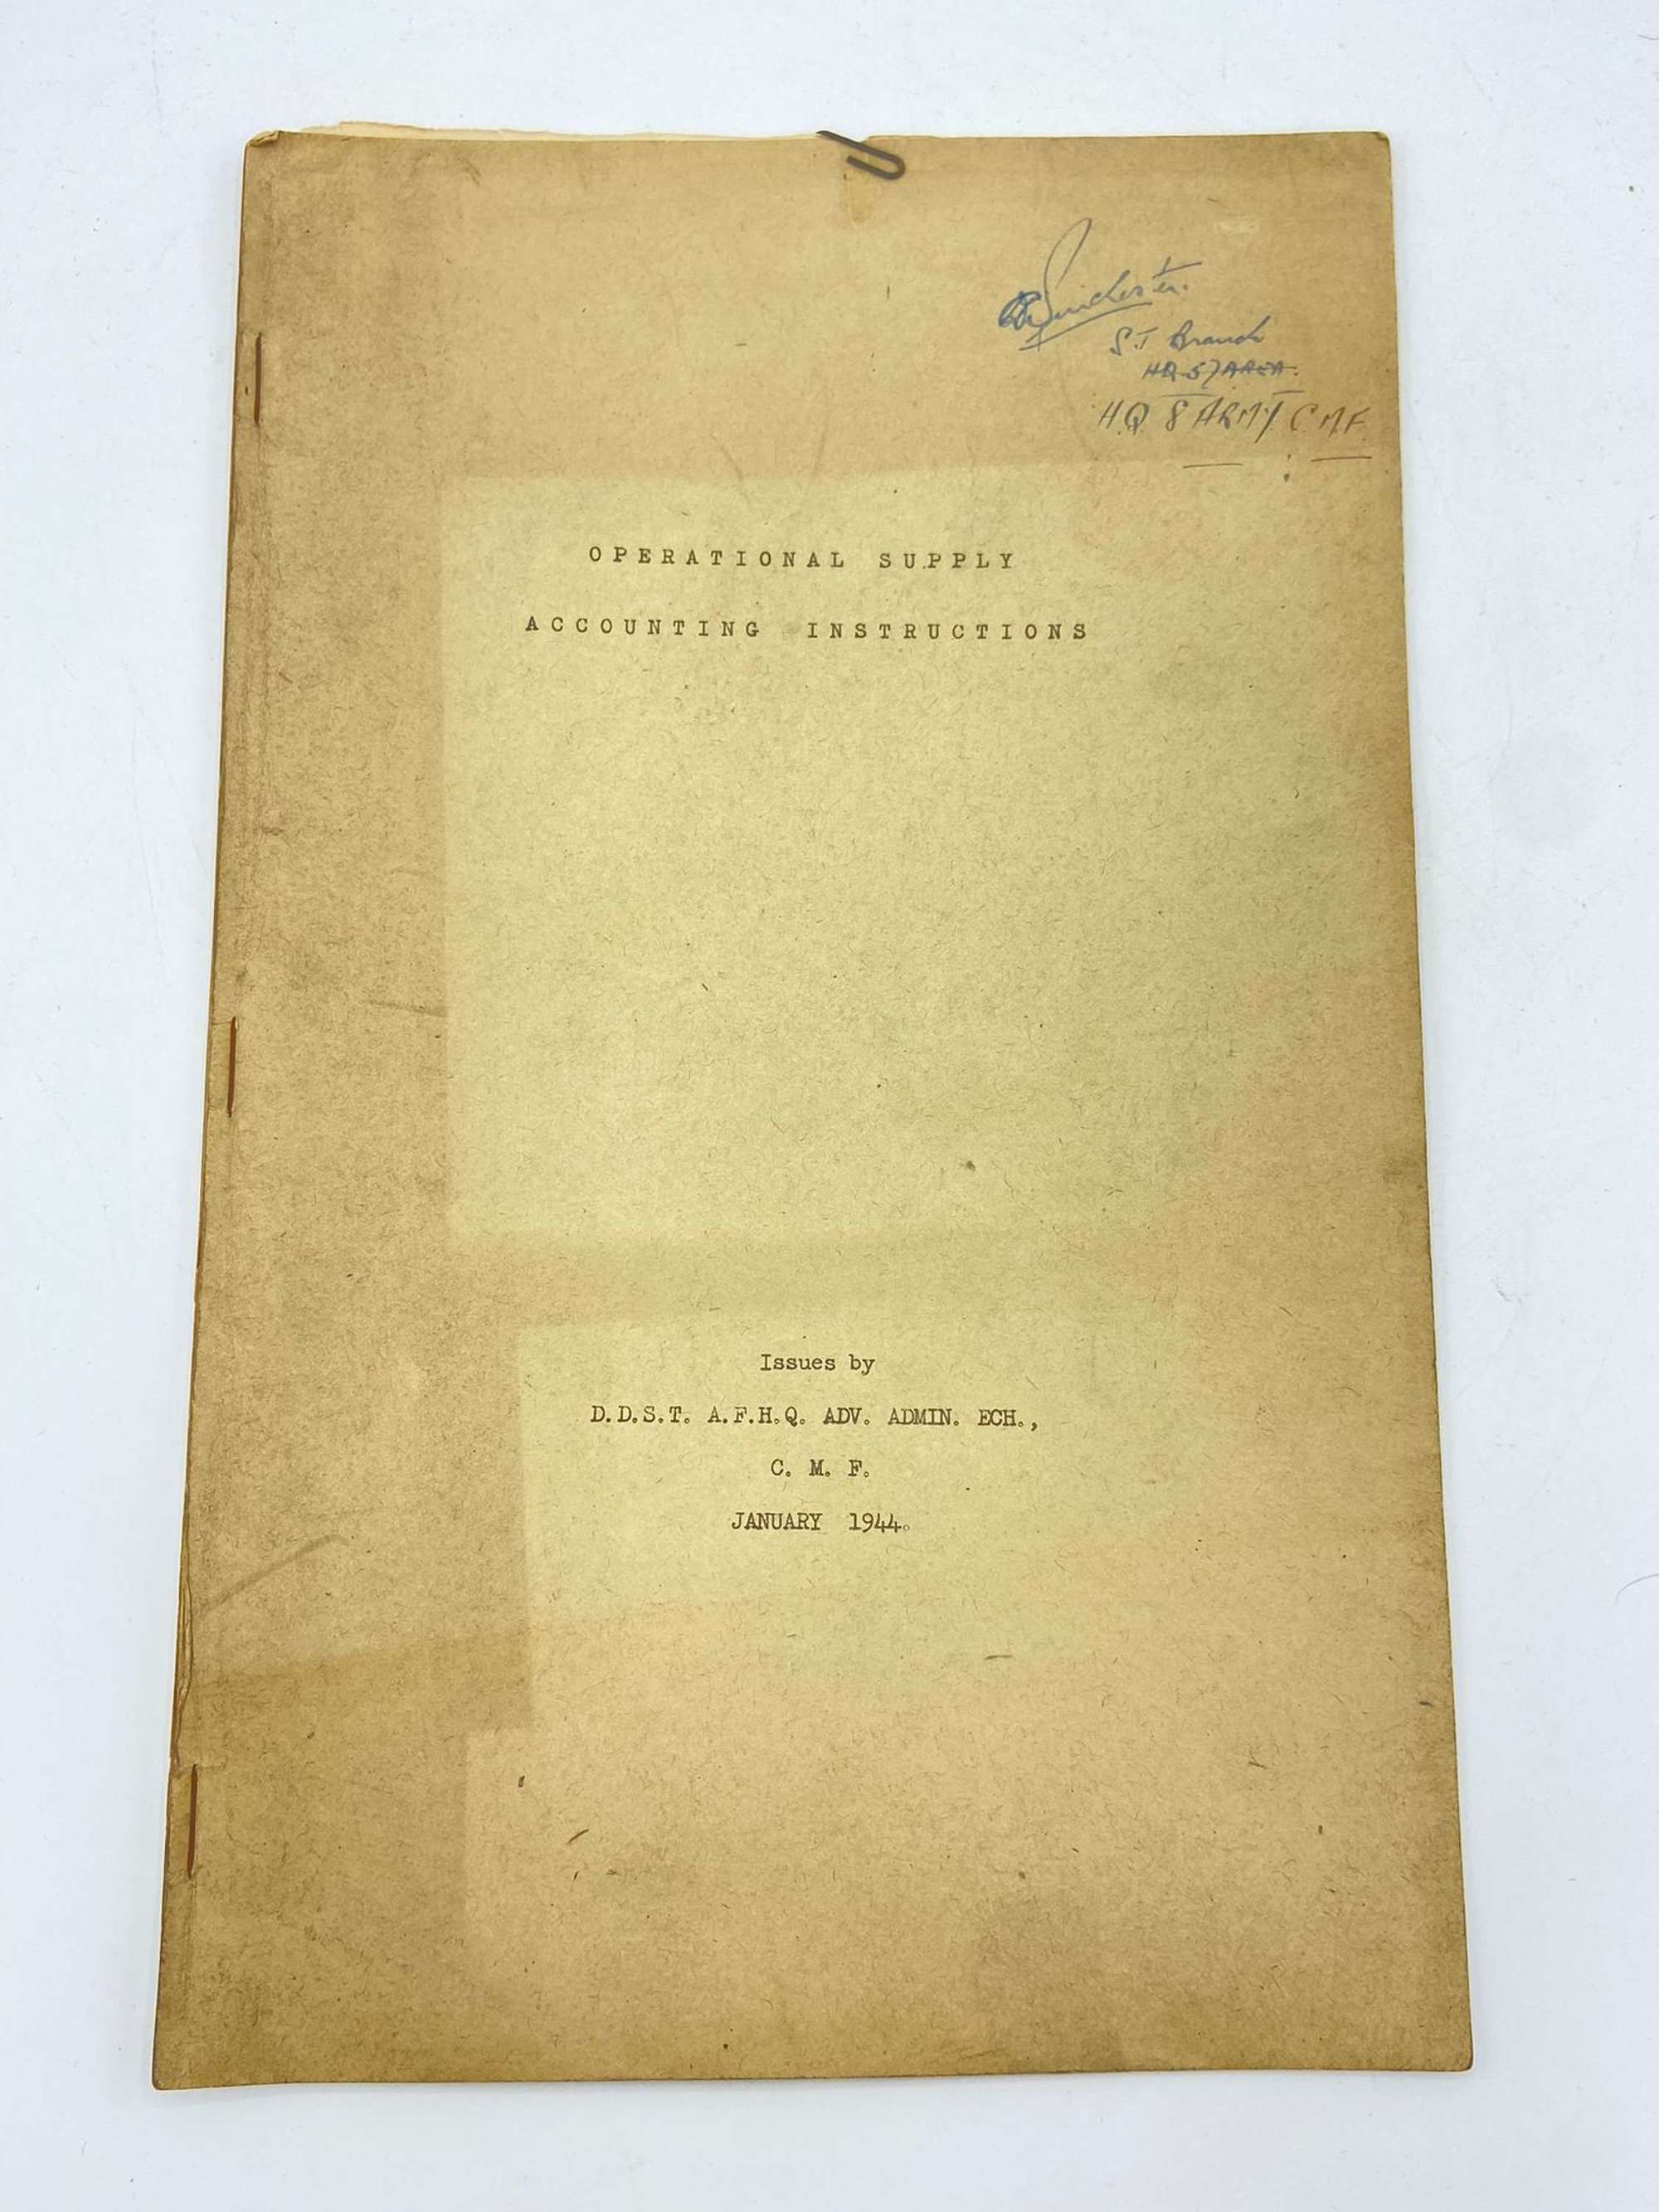 WW2 Operational Supply Accounting Instructions Folder, 8th Army HQ CMF